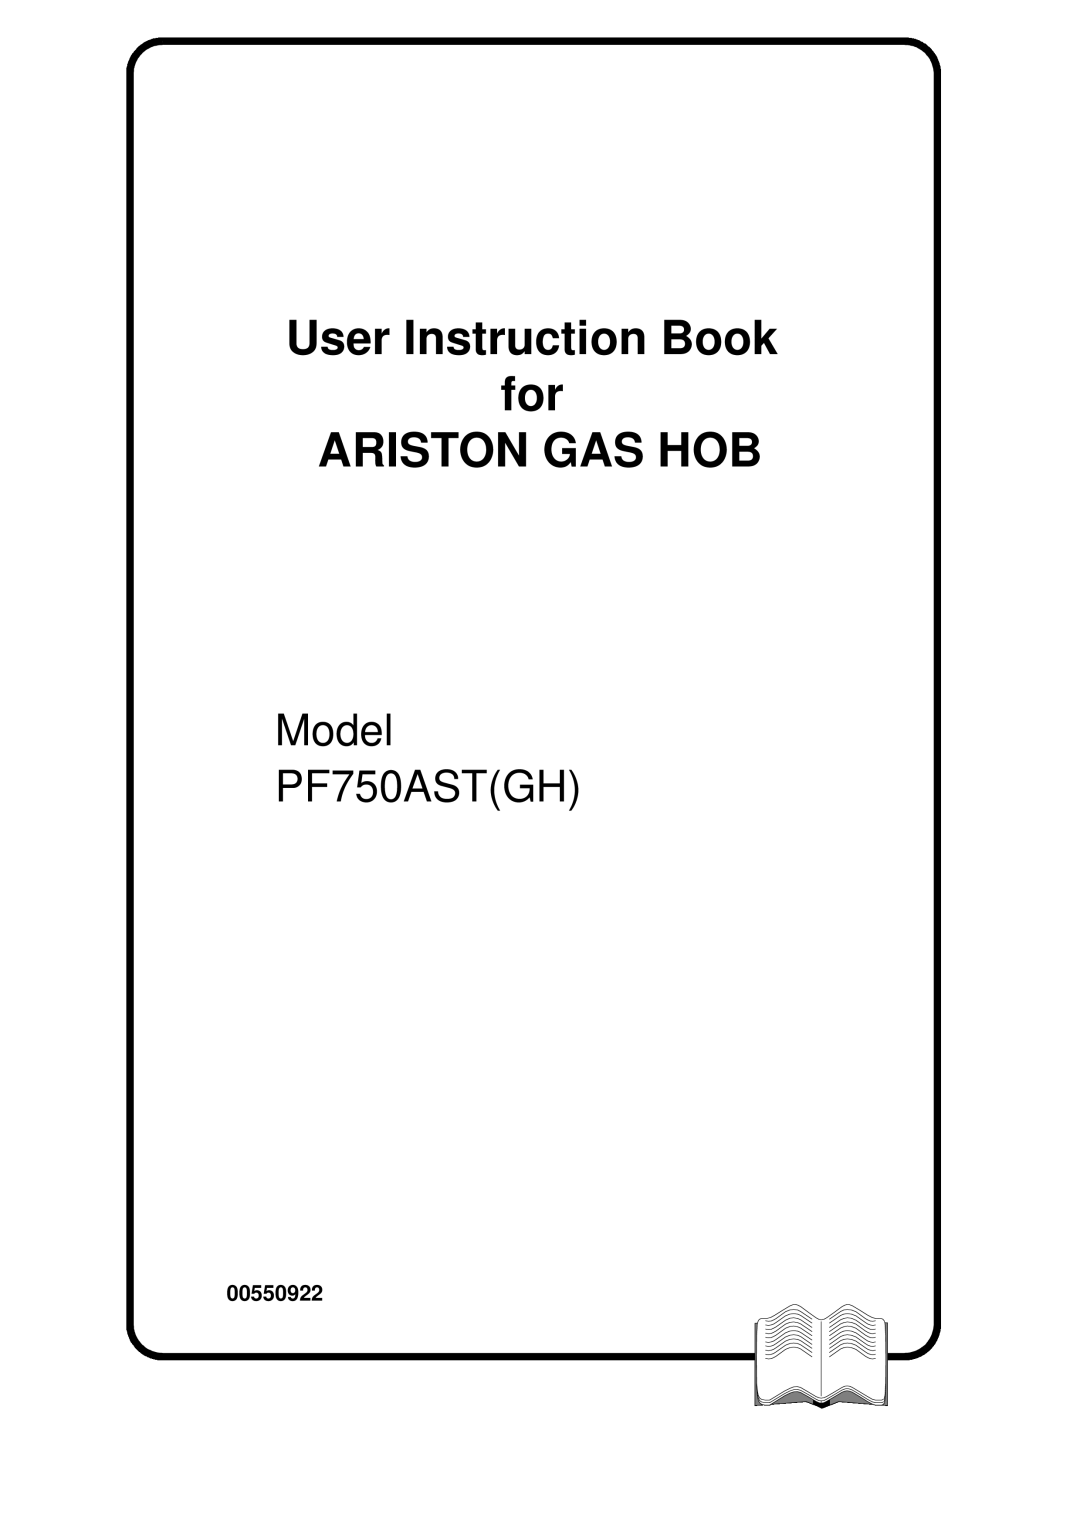 Ariston manual User Instruction Book for ARISTON GAS HOB, Model PF750ASTGH, 00550922 